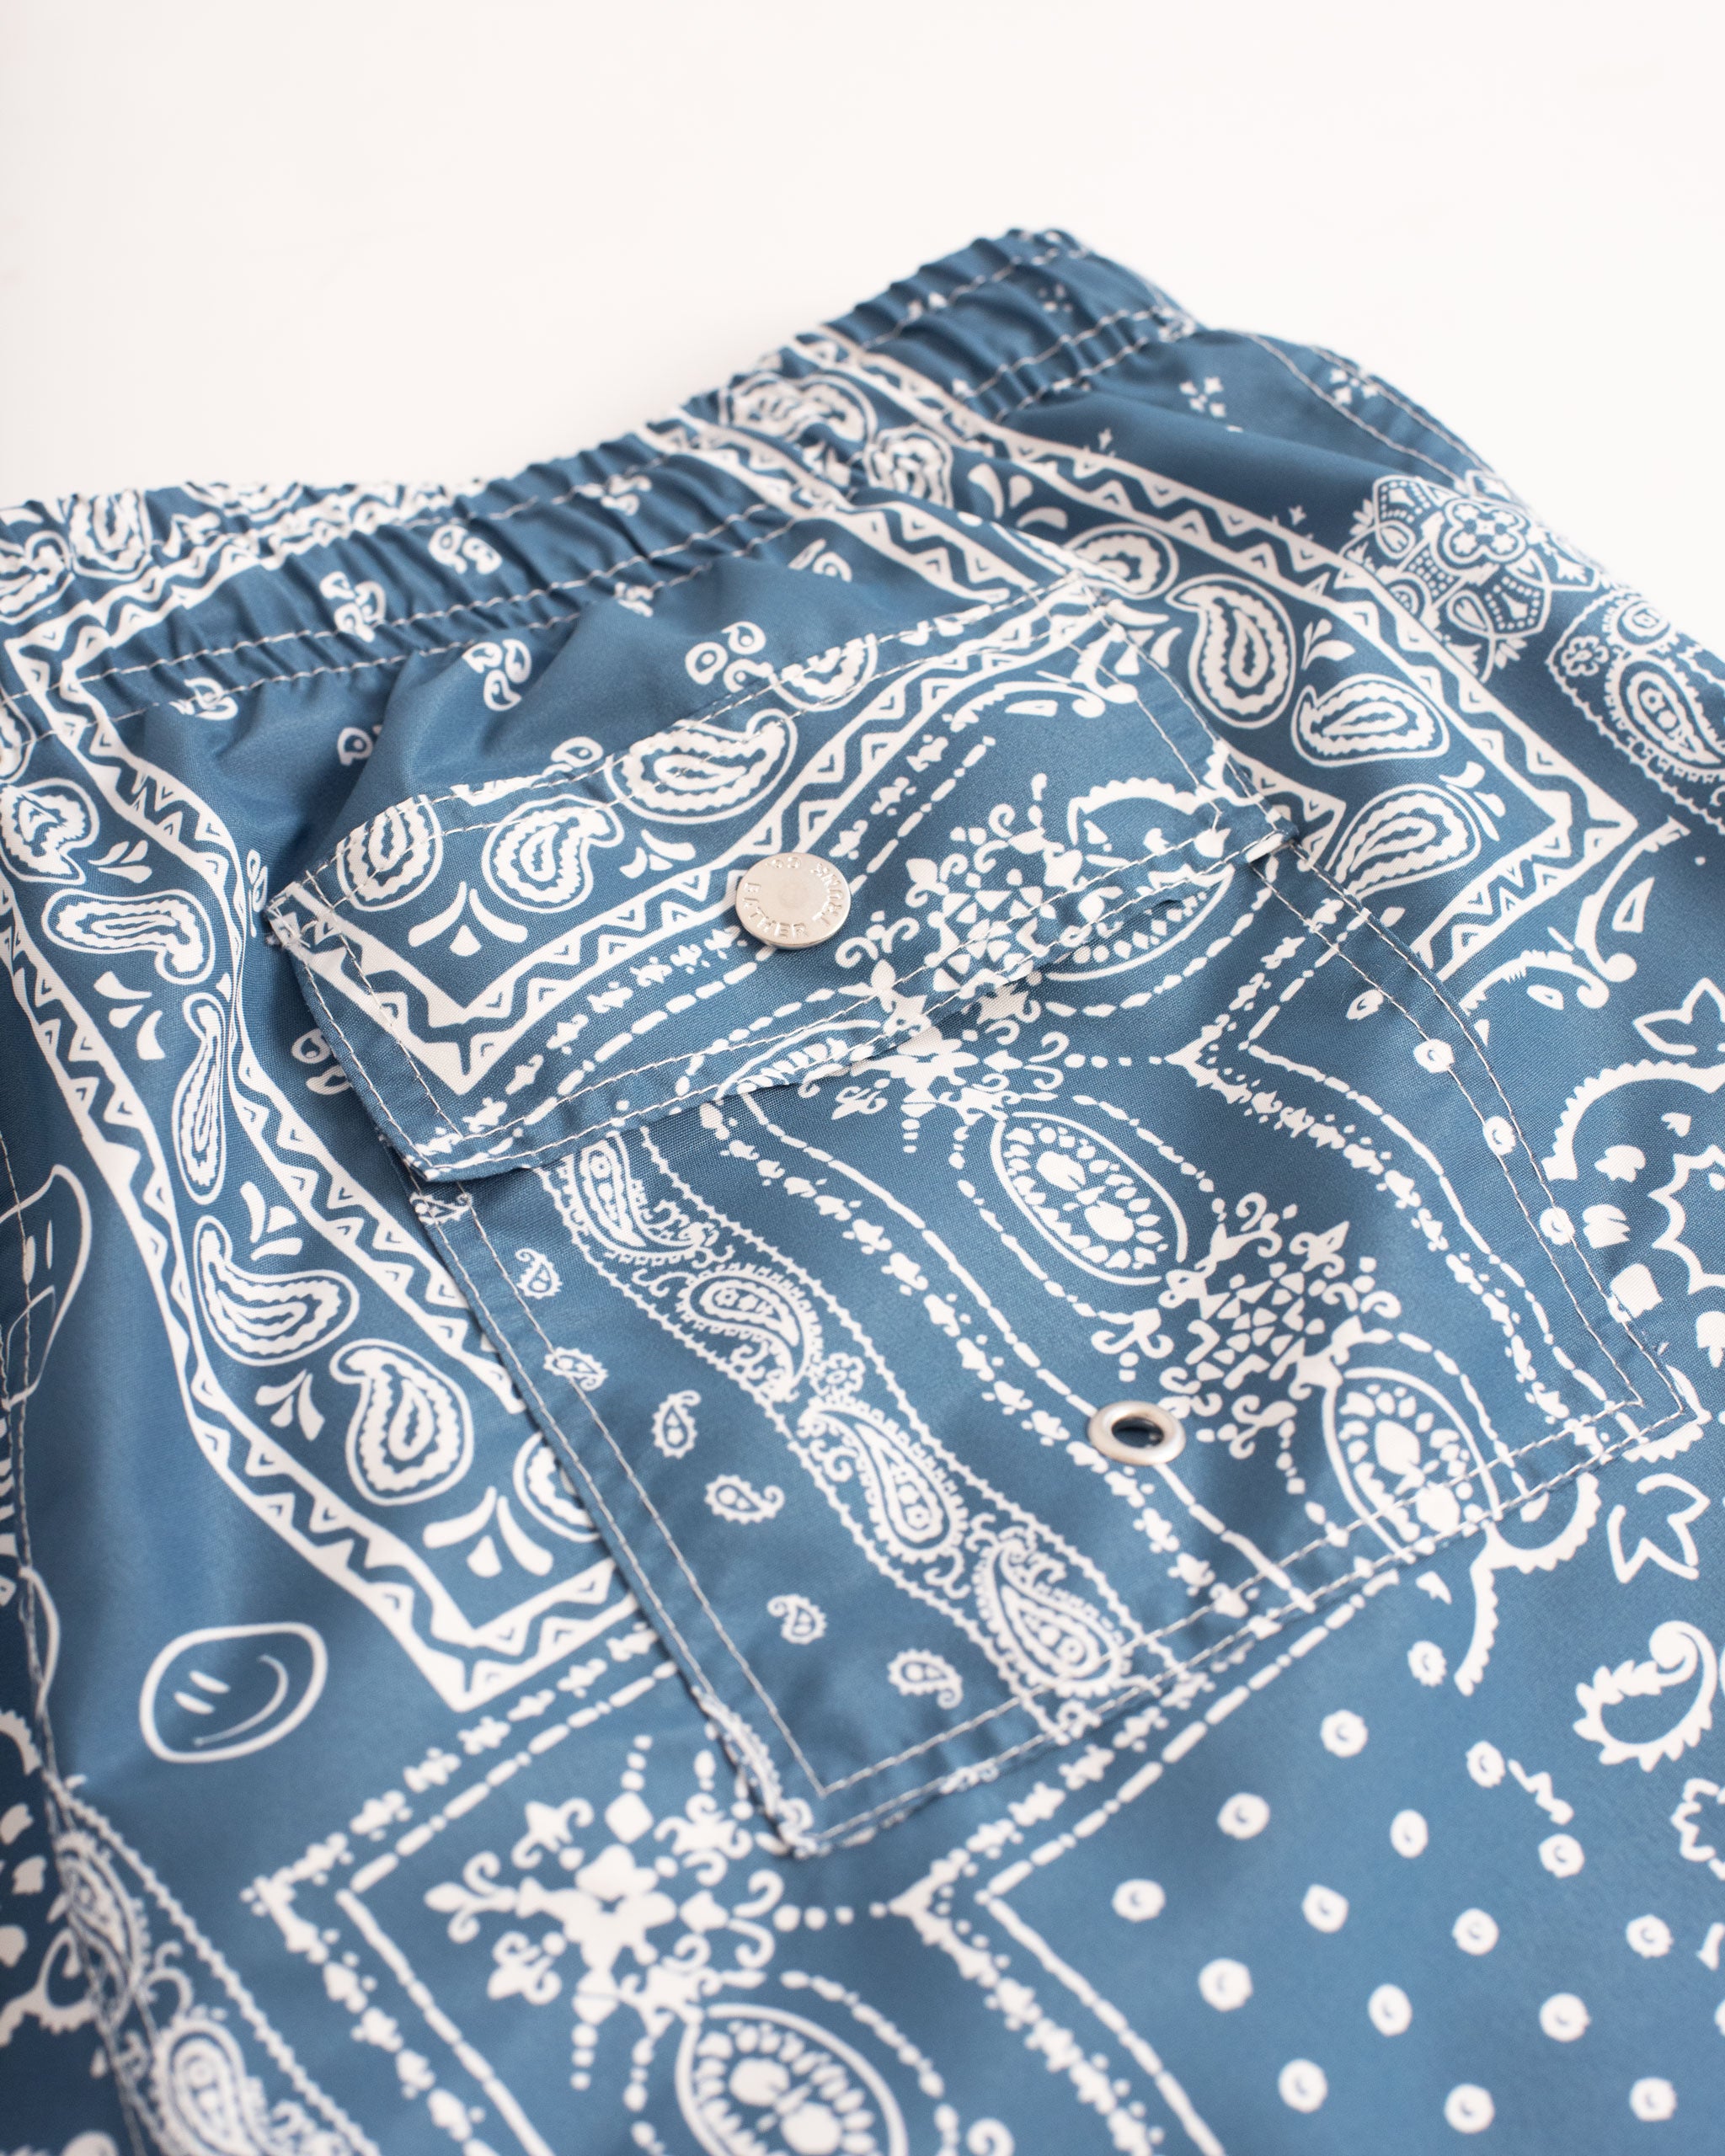 Back Pocket Shot Of Blue swim trunk with all-over bandana print